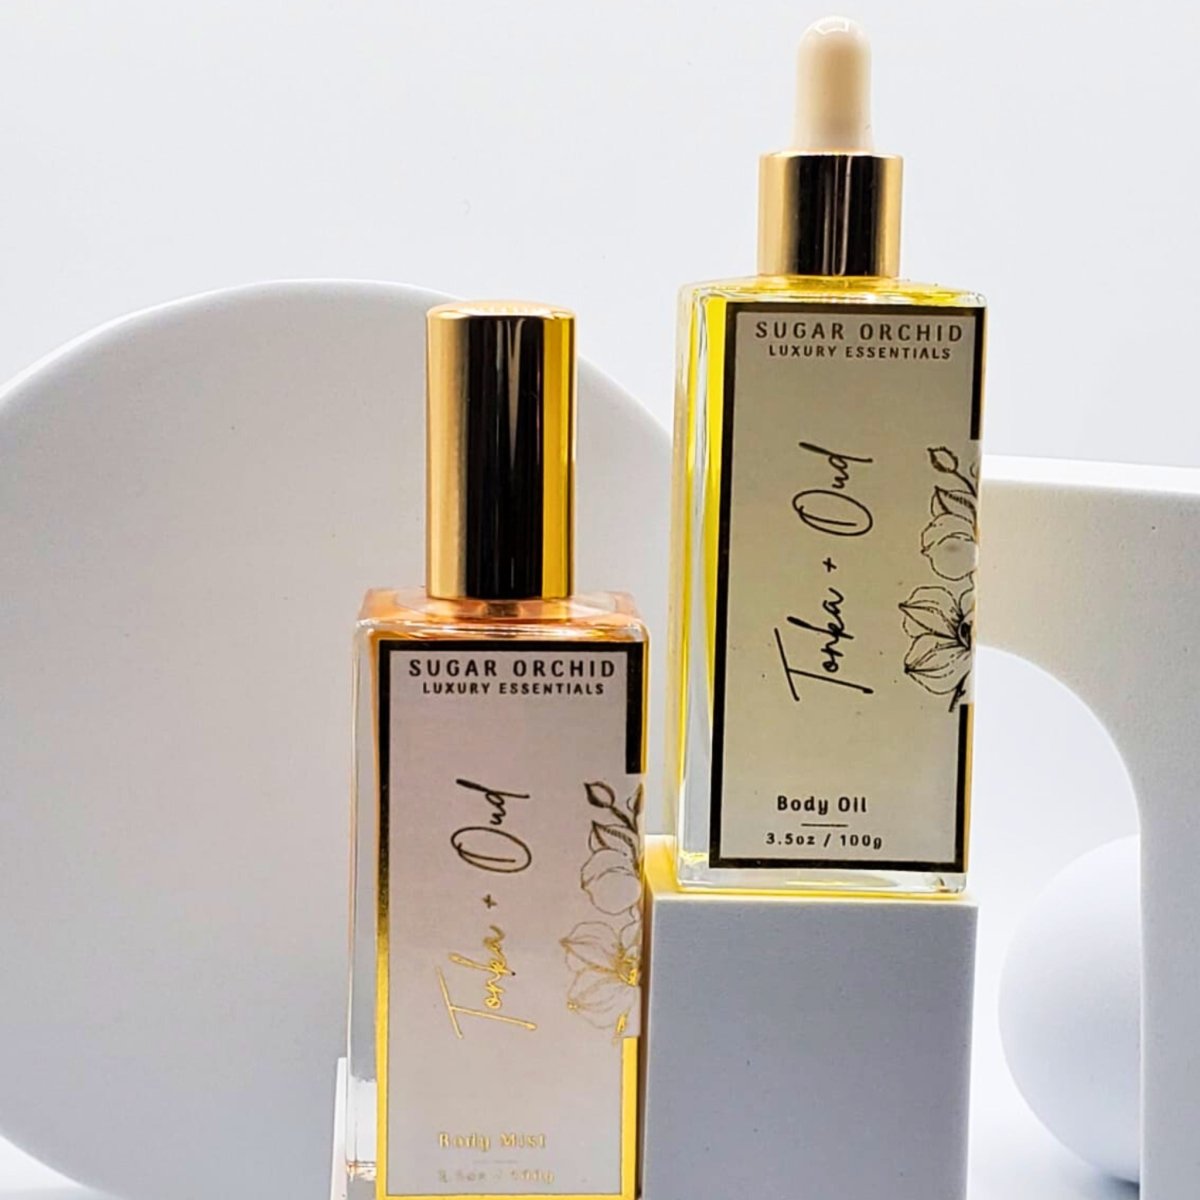 Body oil and Body Spray SET - Sugar Orchid Luxury Essentials